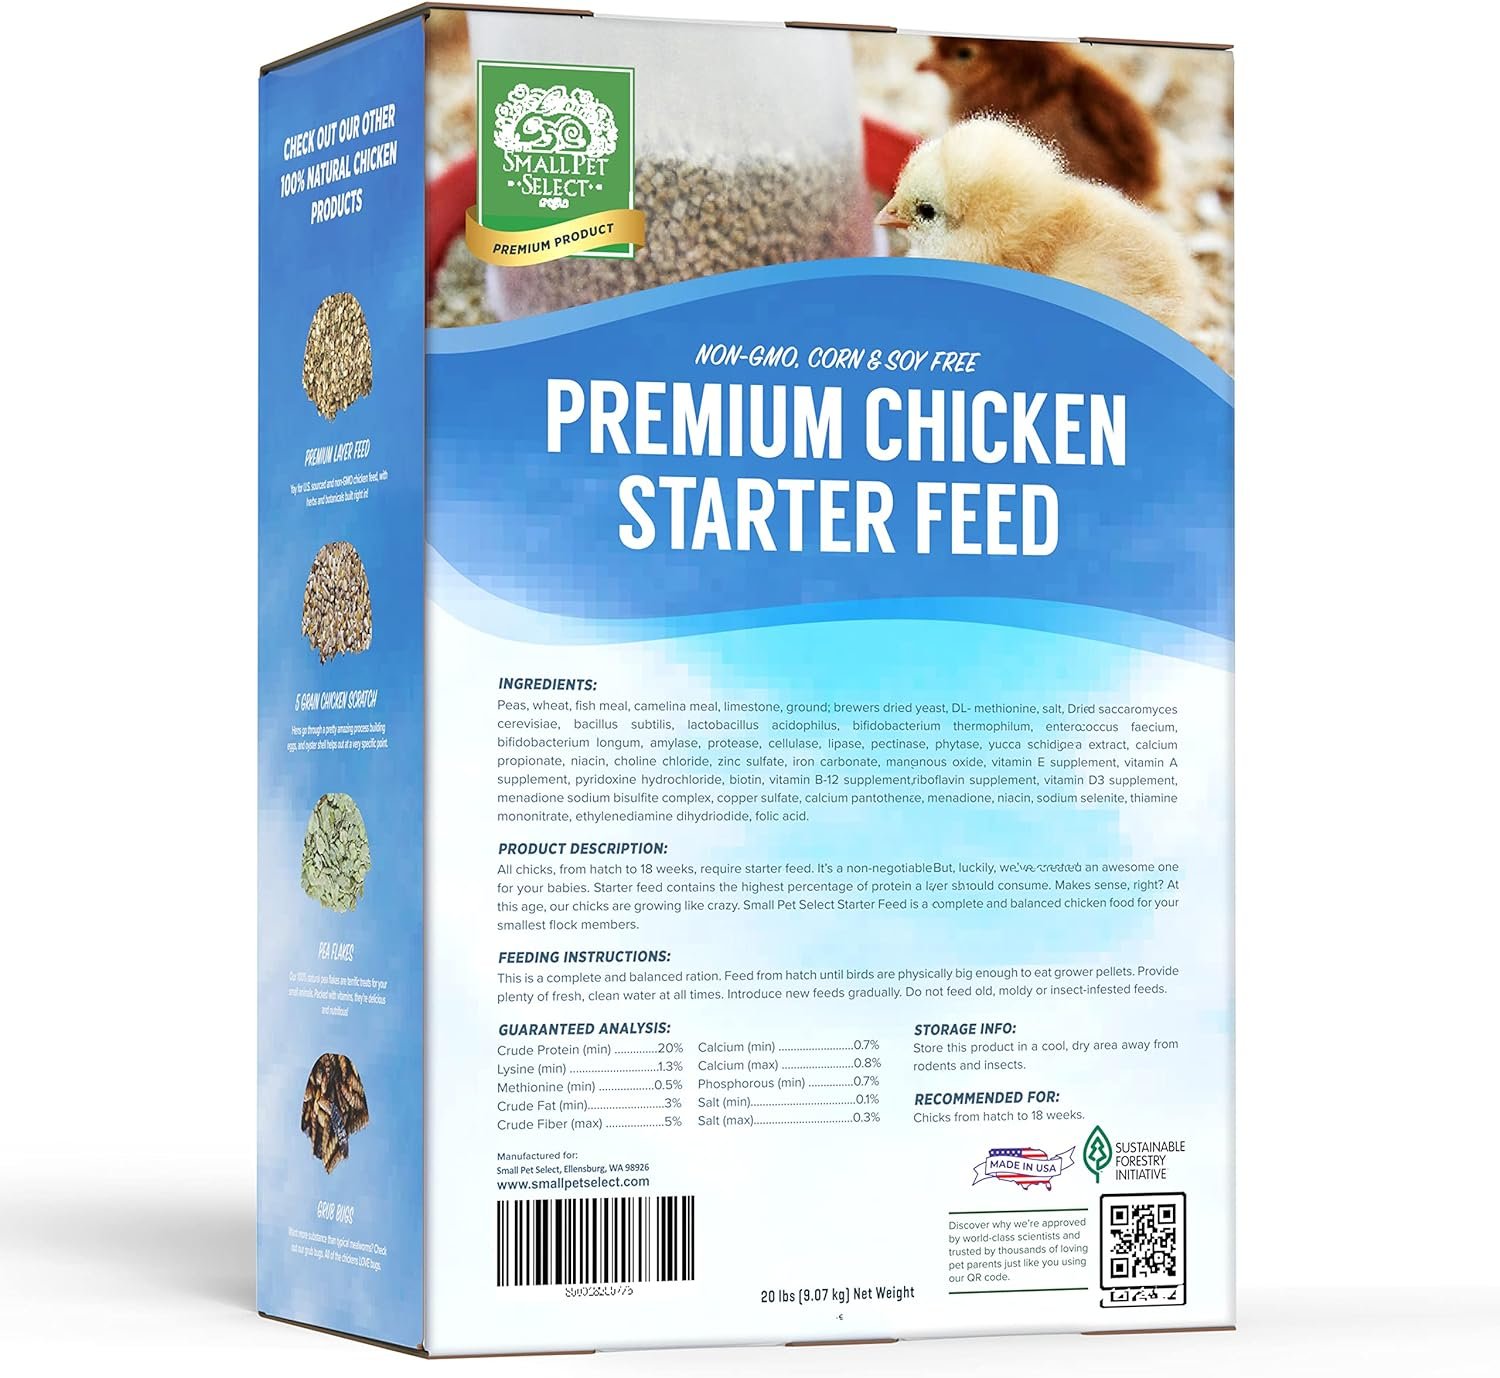 Small Pet Select - Chicken Starter Feed (Corn-Free/Soy-Free/Non-GMO), 20lb